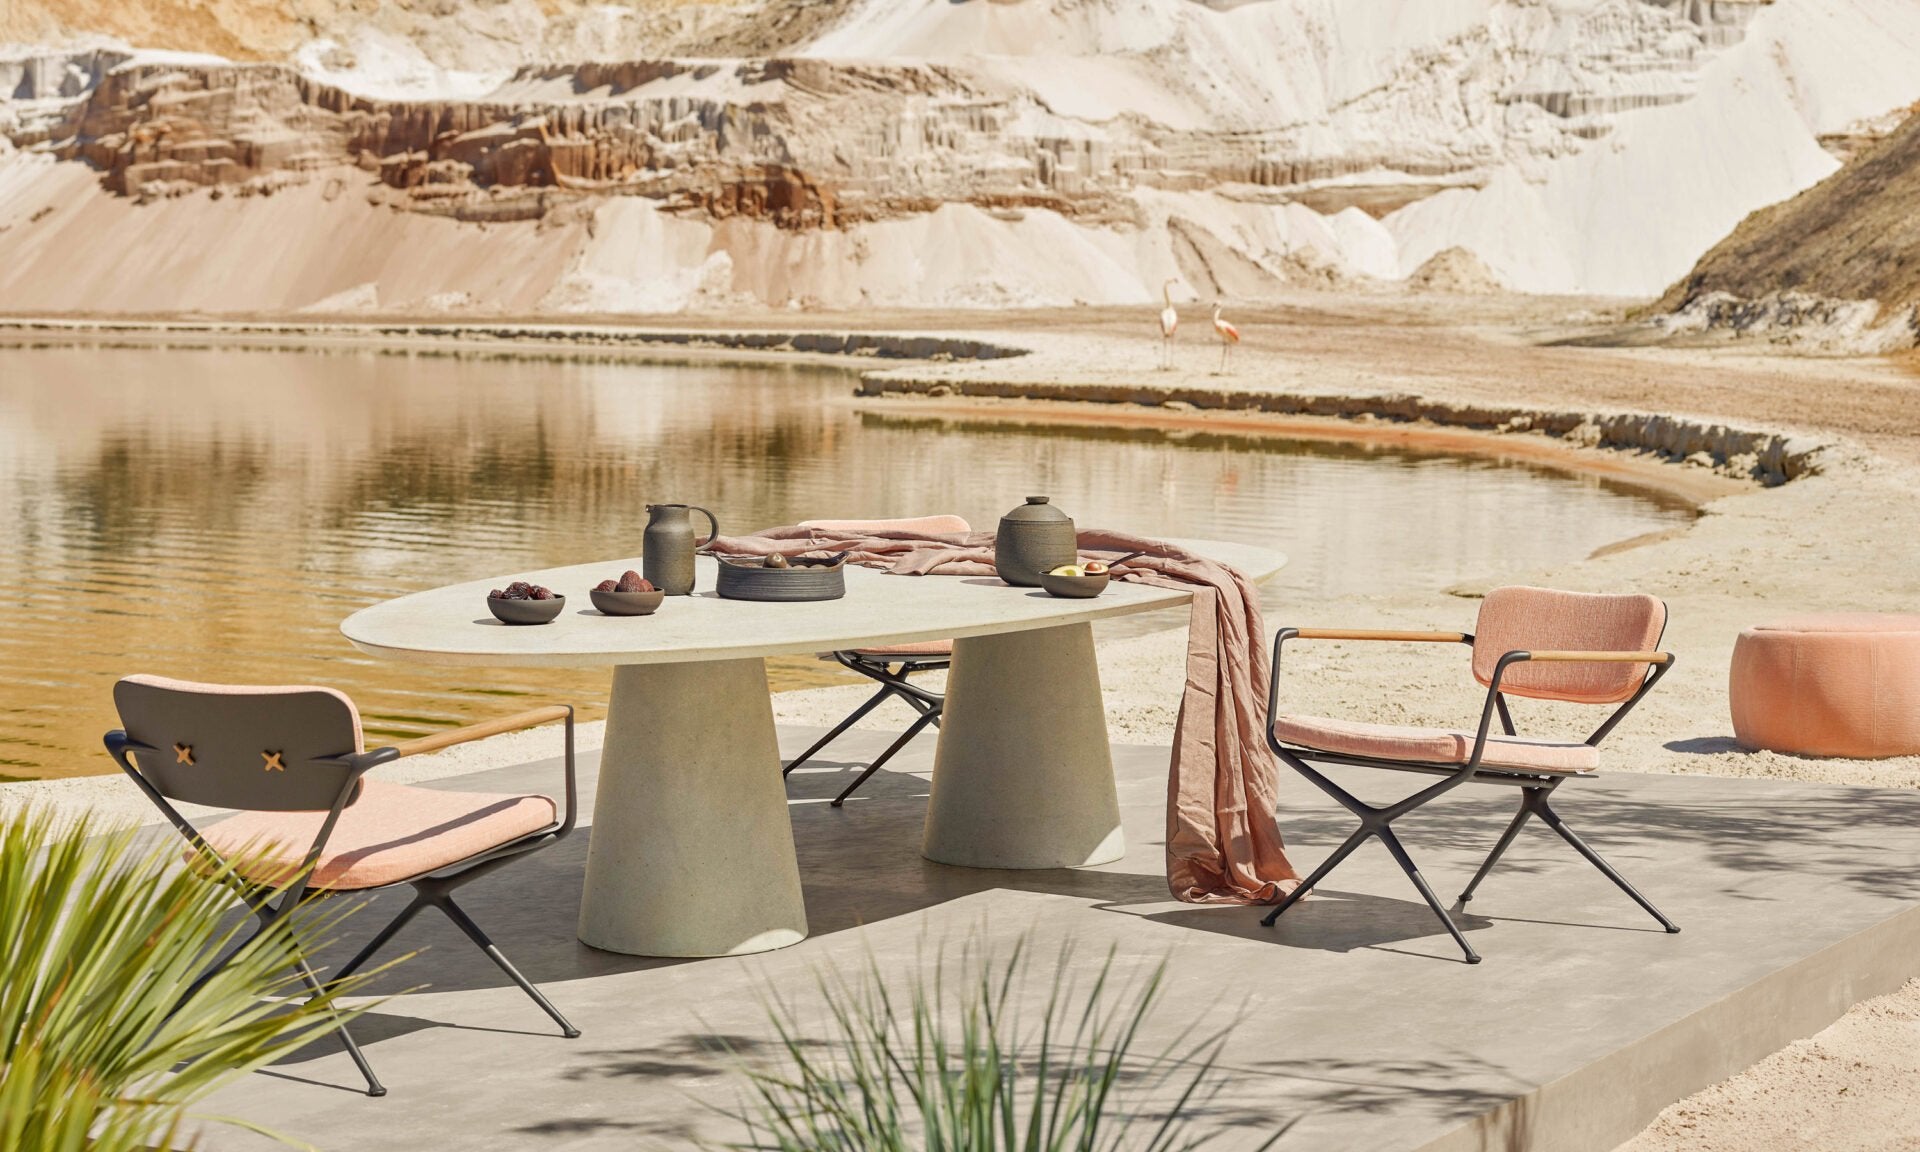 Conix Table Round Ø 160cm Low Lounge Leg Concrete Cement Grey - Tabletop Ceramic Pearl Grey